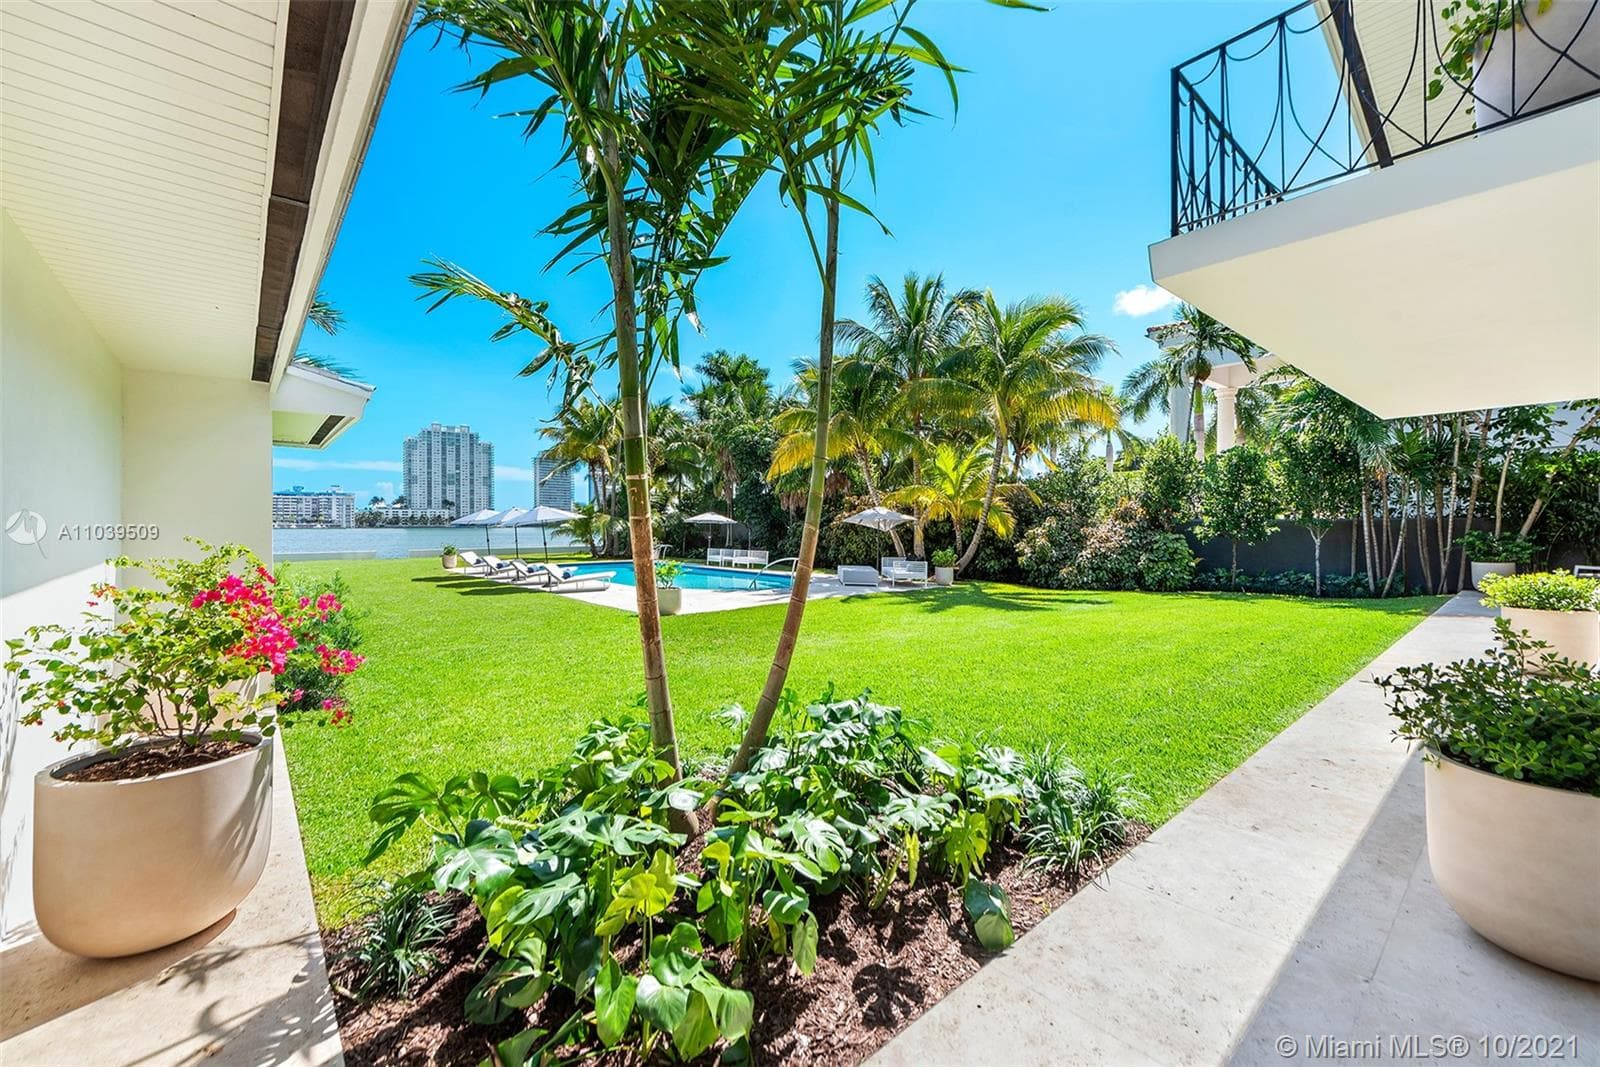 9 Bedroom Condominium For Sale Miami Beach Lp09826 256e9491a1ec3a00.jpg